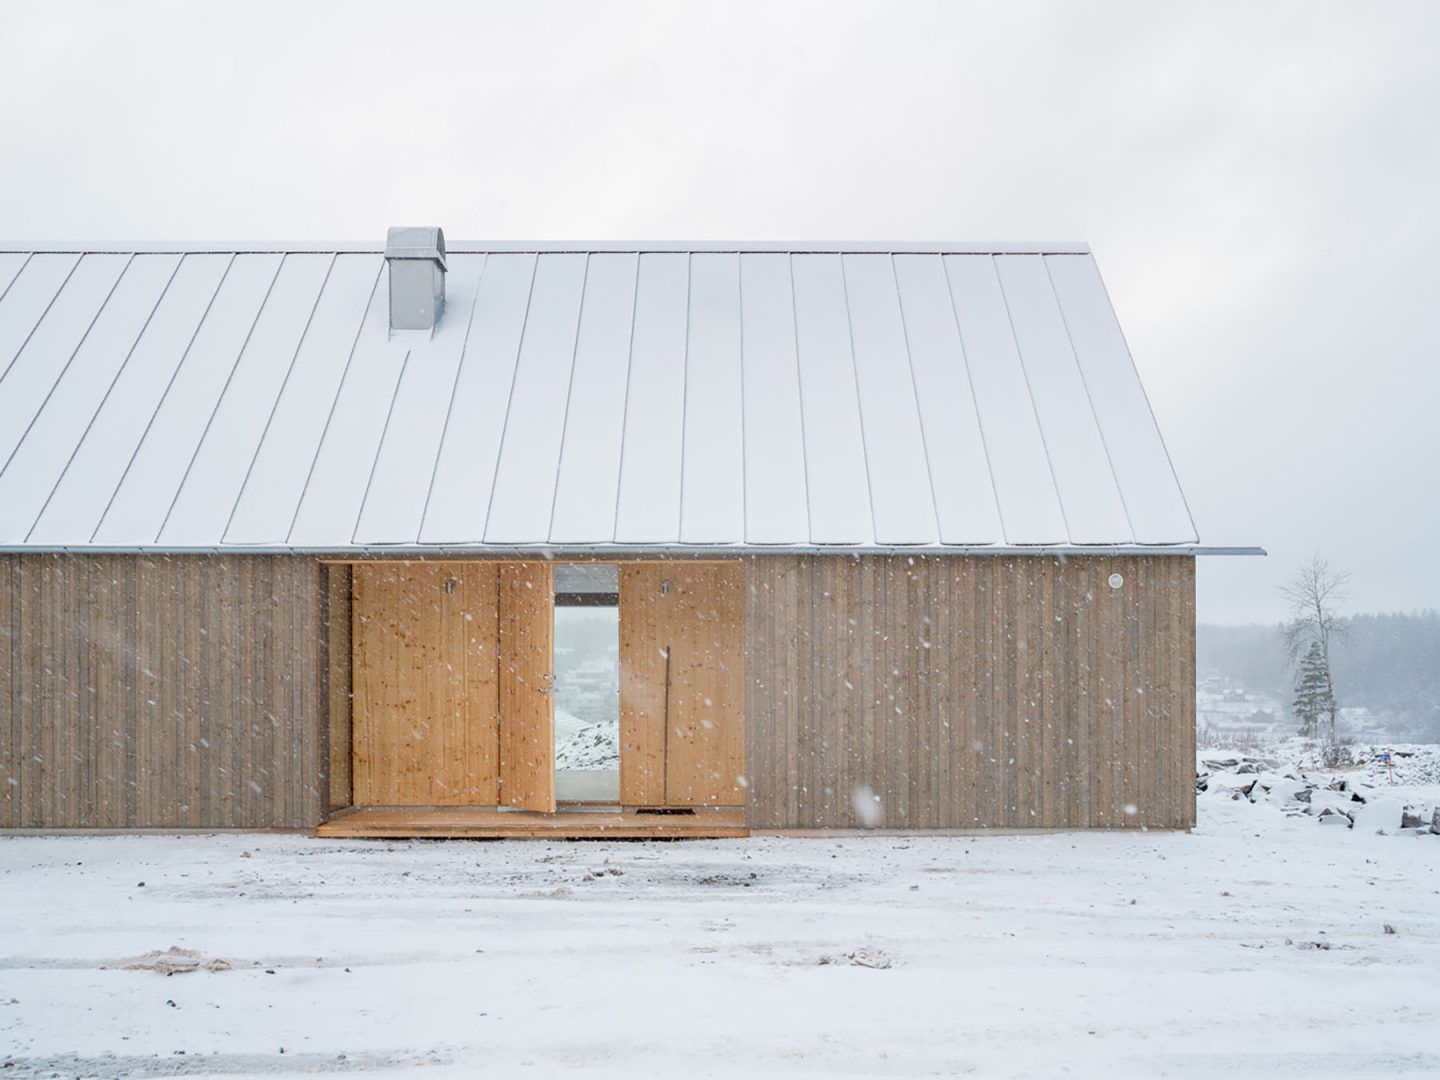 ignant-architecture-jim-brunnestom-dalsland-cabin-2.0-5-1440x1080.jpg